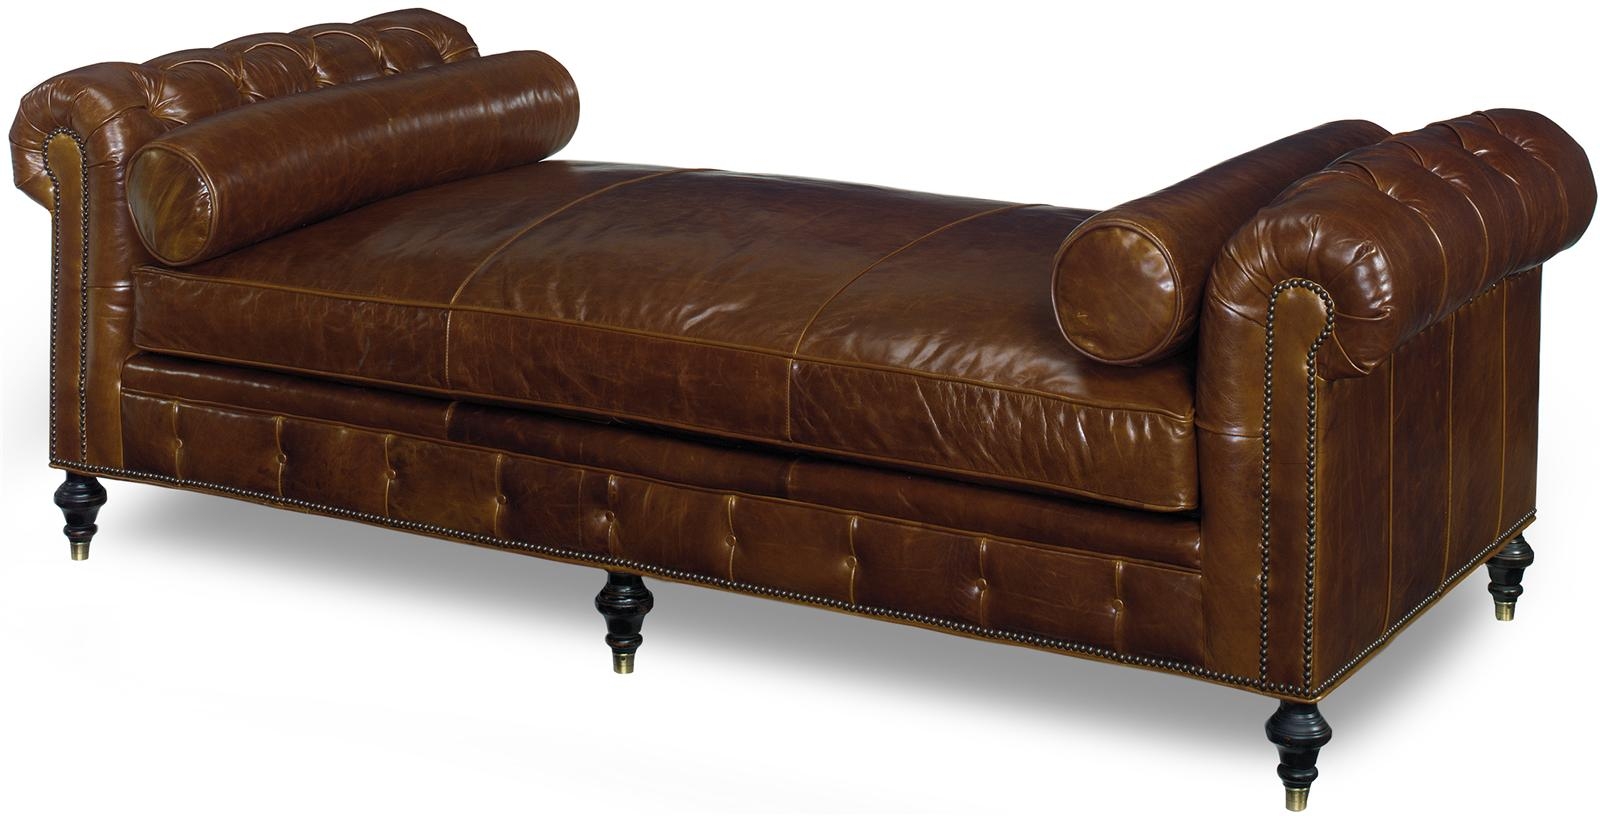 chaise longue leather sofa